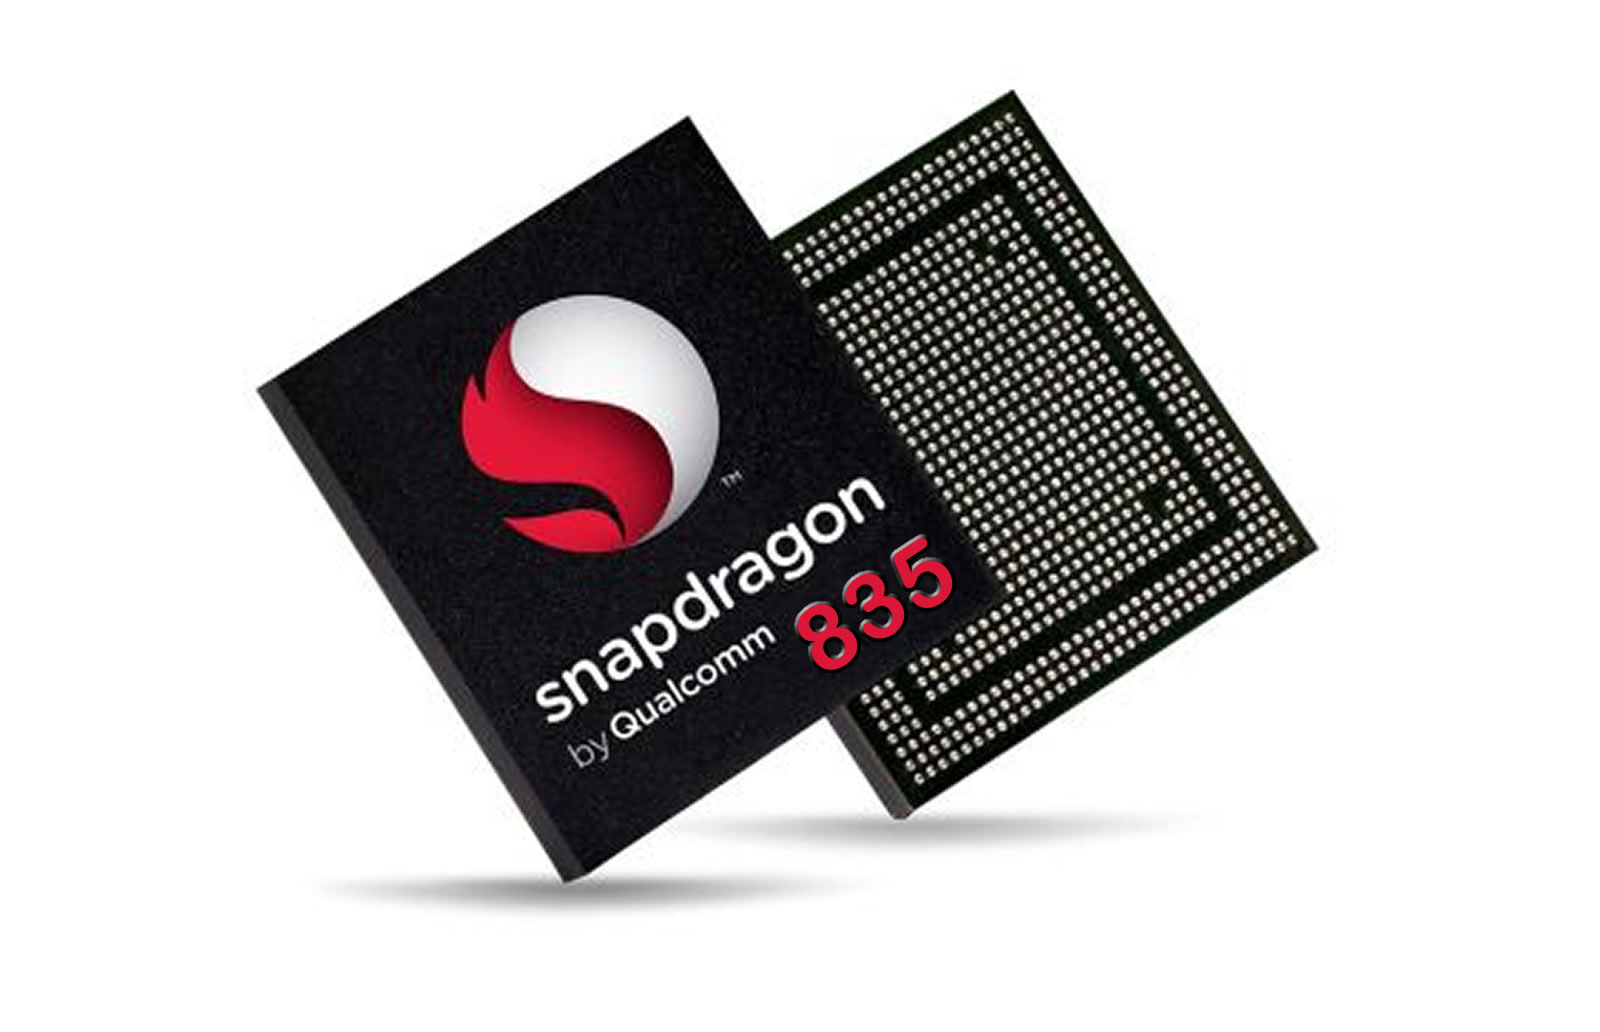 Snapdragon 835